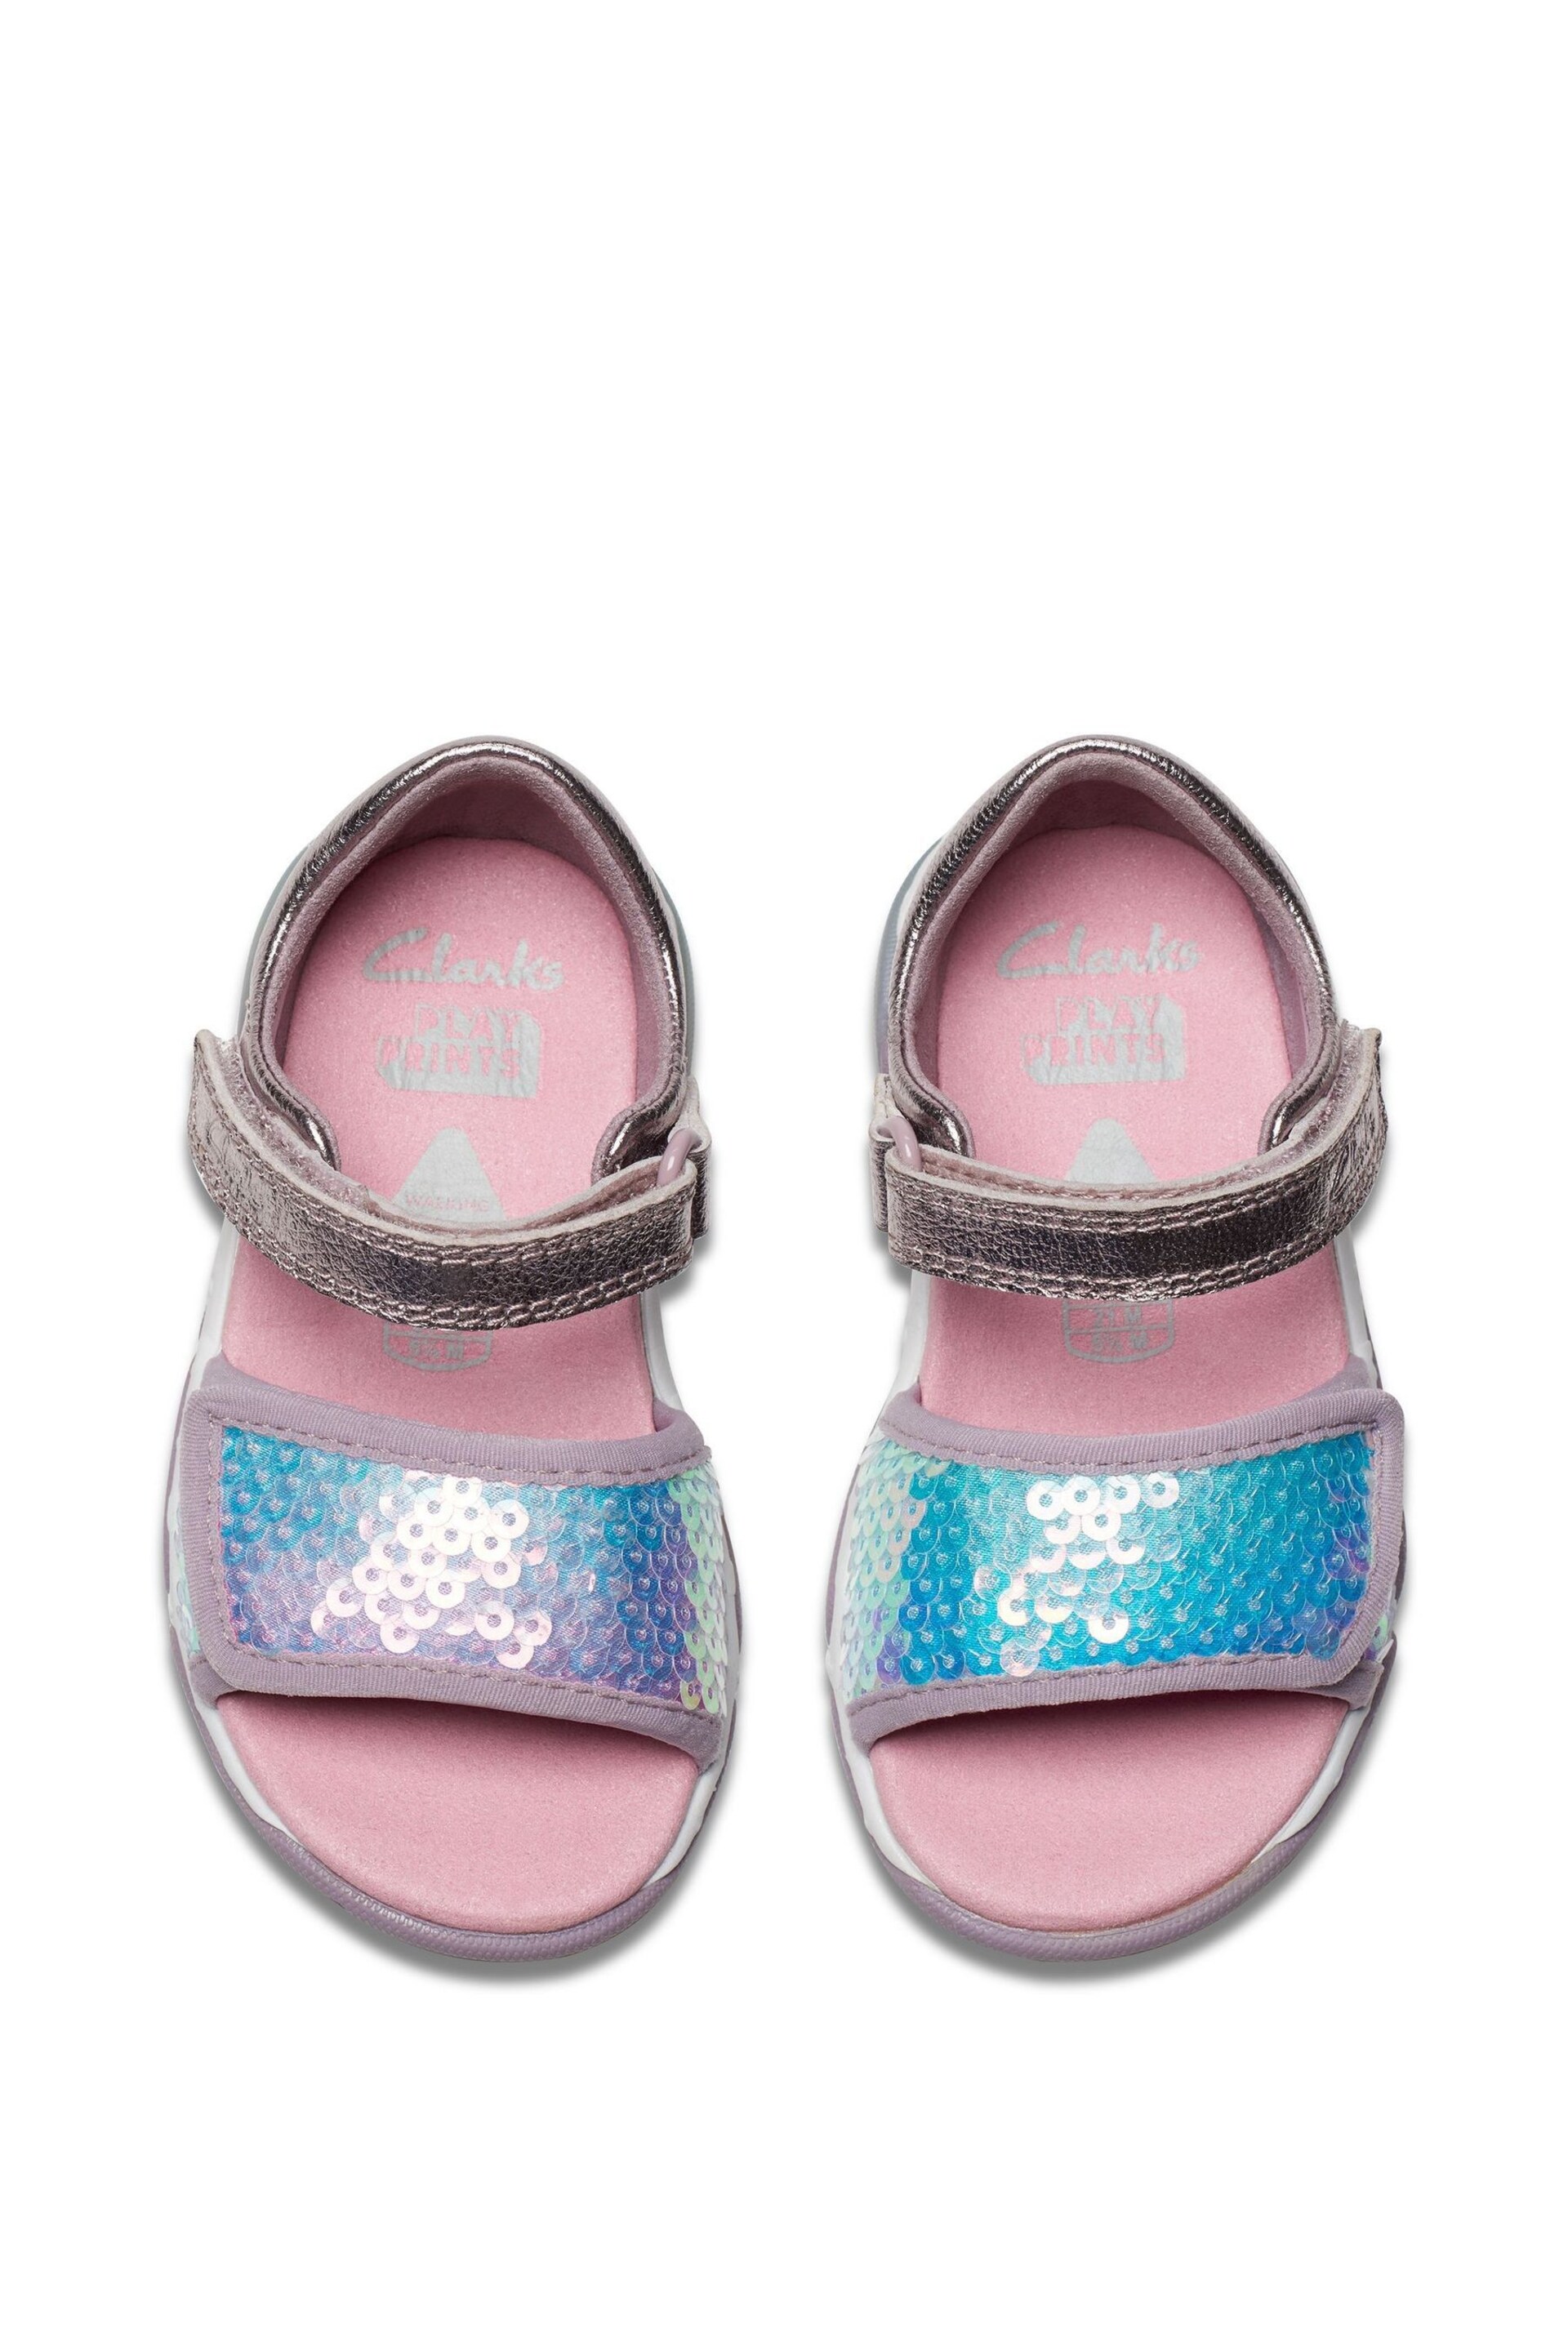 Clarks Purple Osian Spark Toddler Sandals - Image 3 of 6